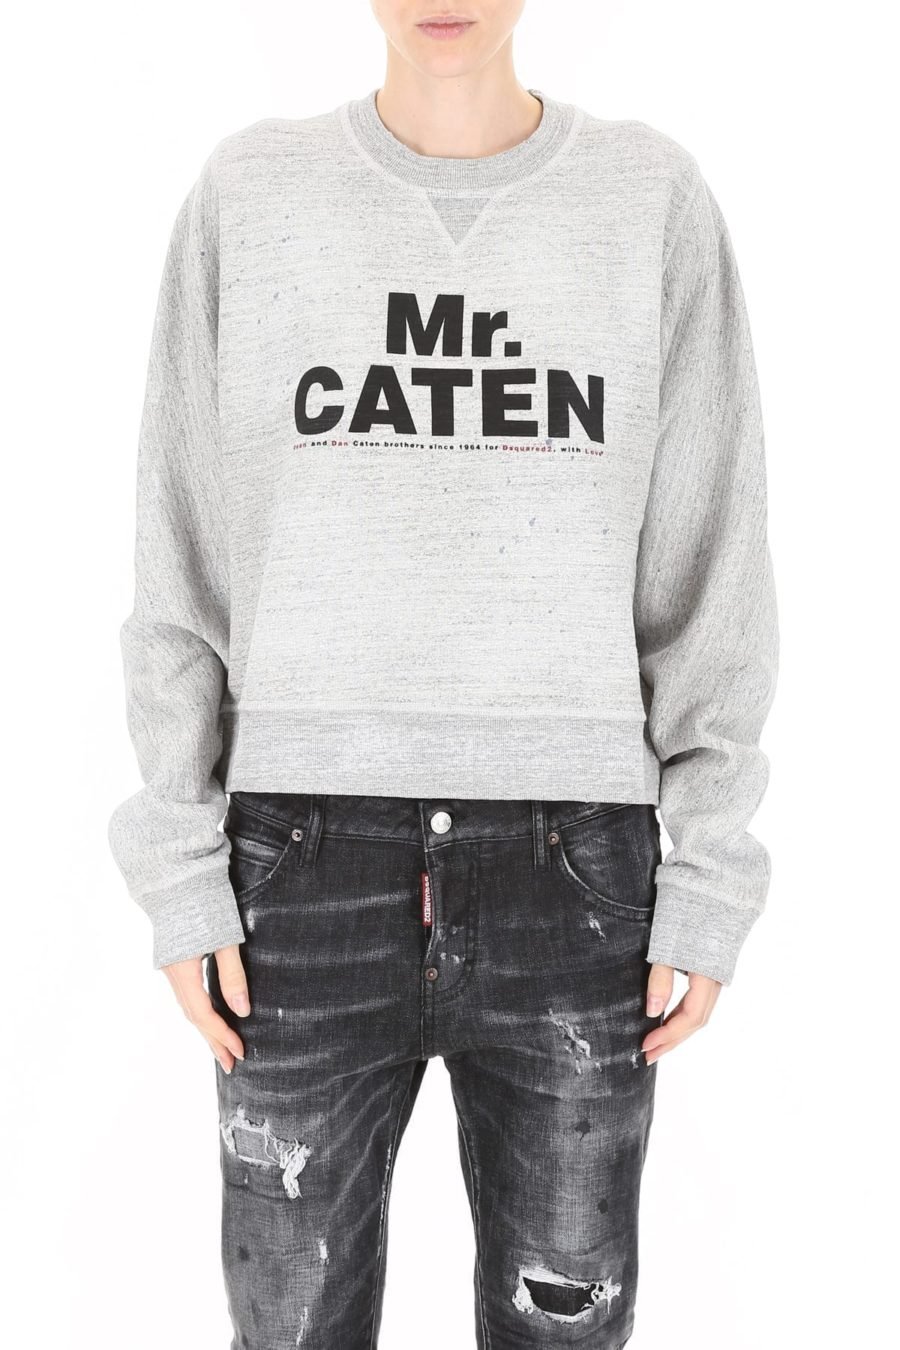 Sweatshirt Dsquared2 Mr. Caten Light Grey - S75GU0164S25148otr 13